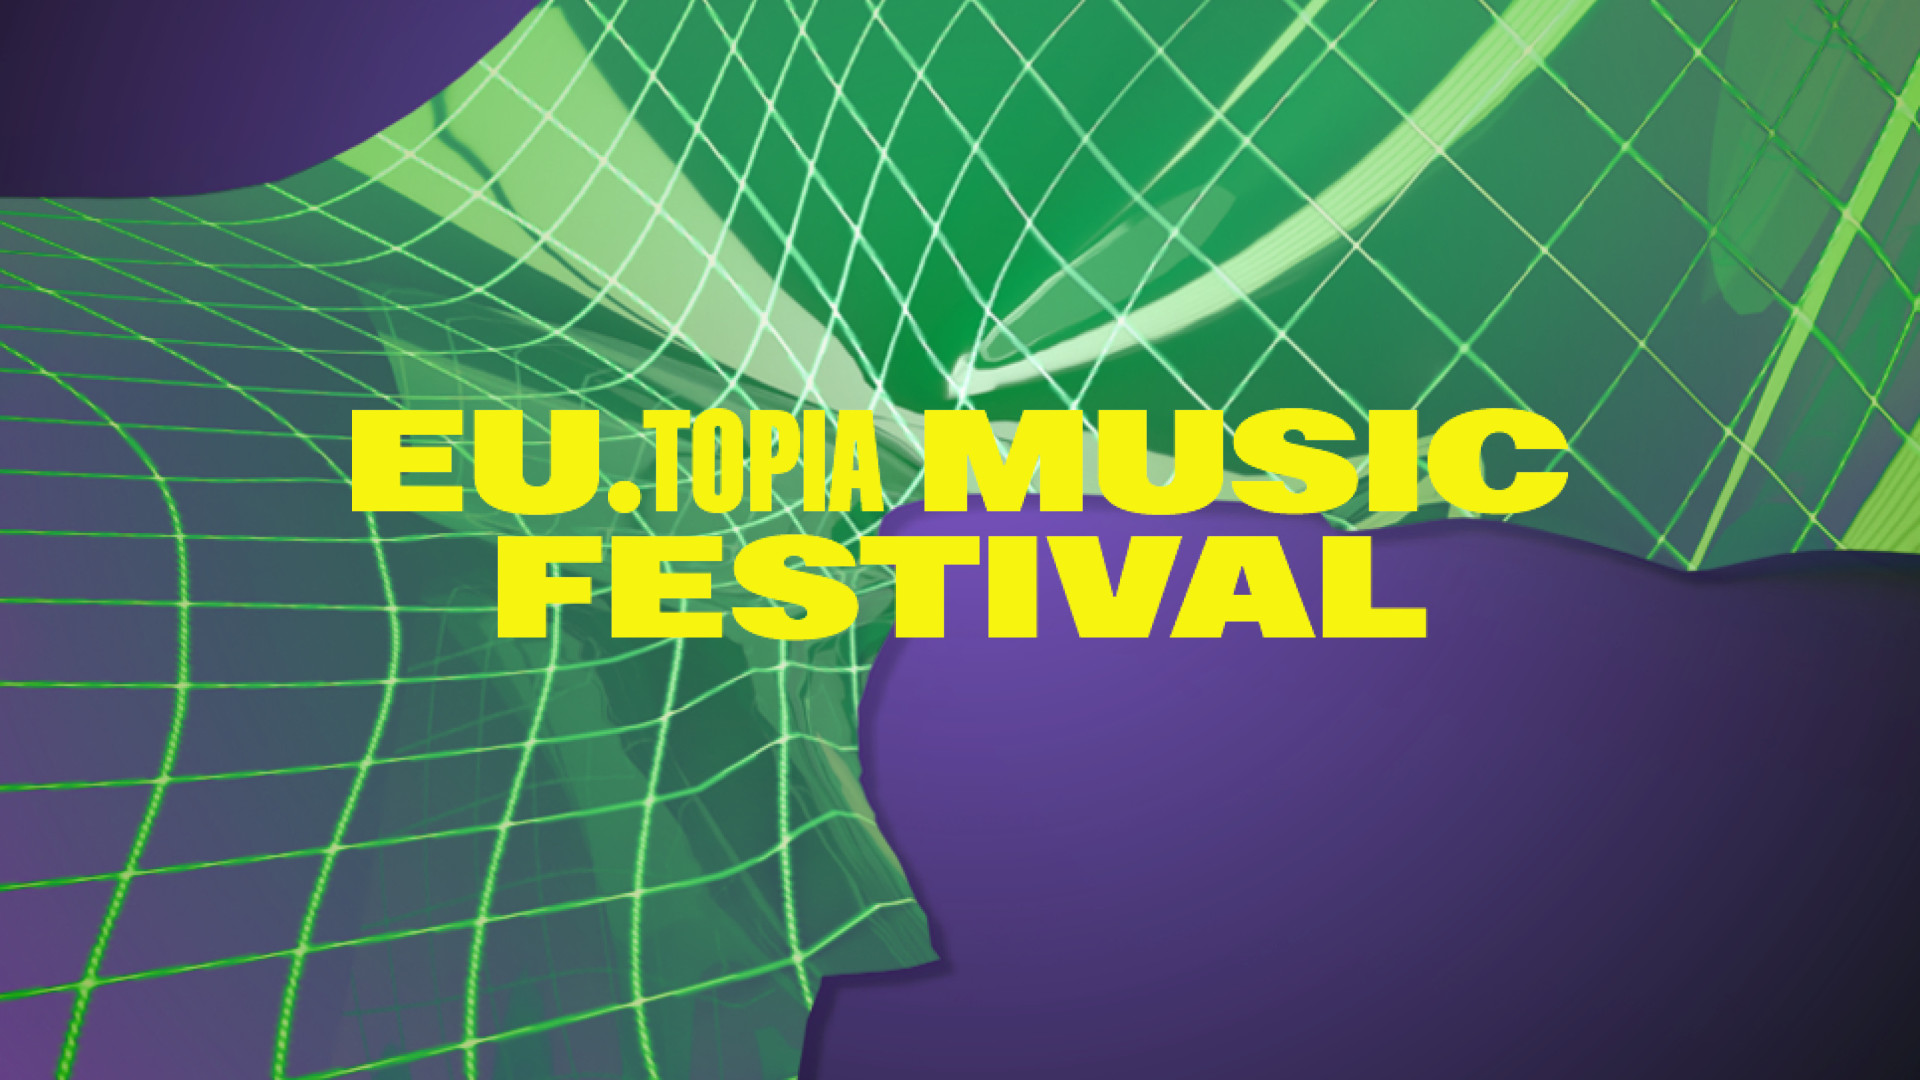 EU.TOPIA Music Festival